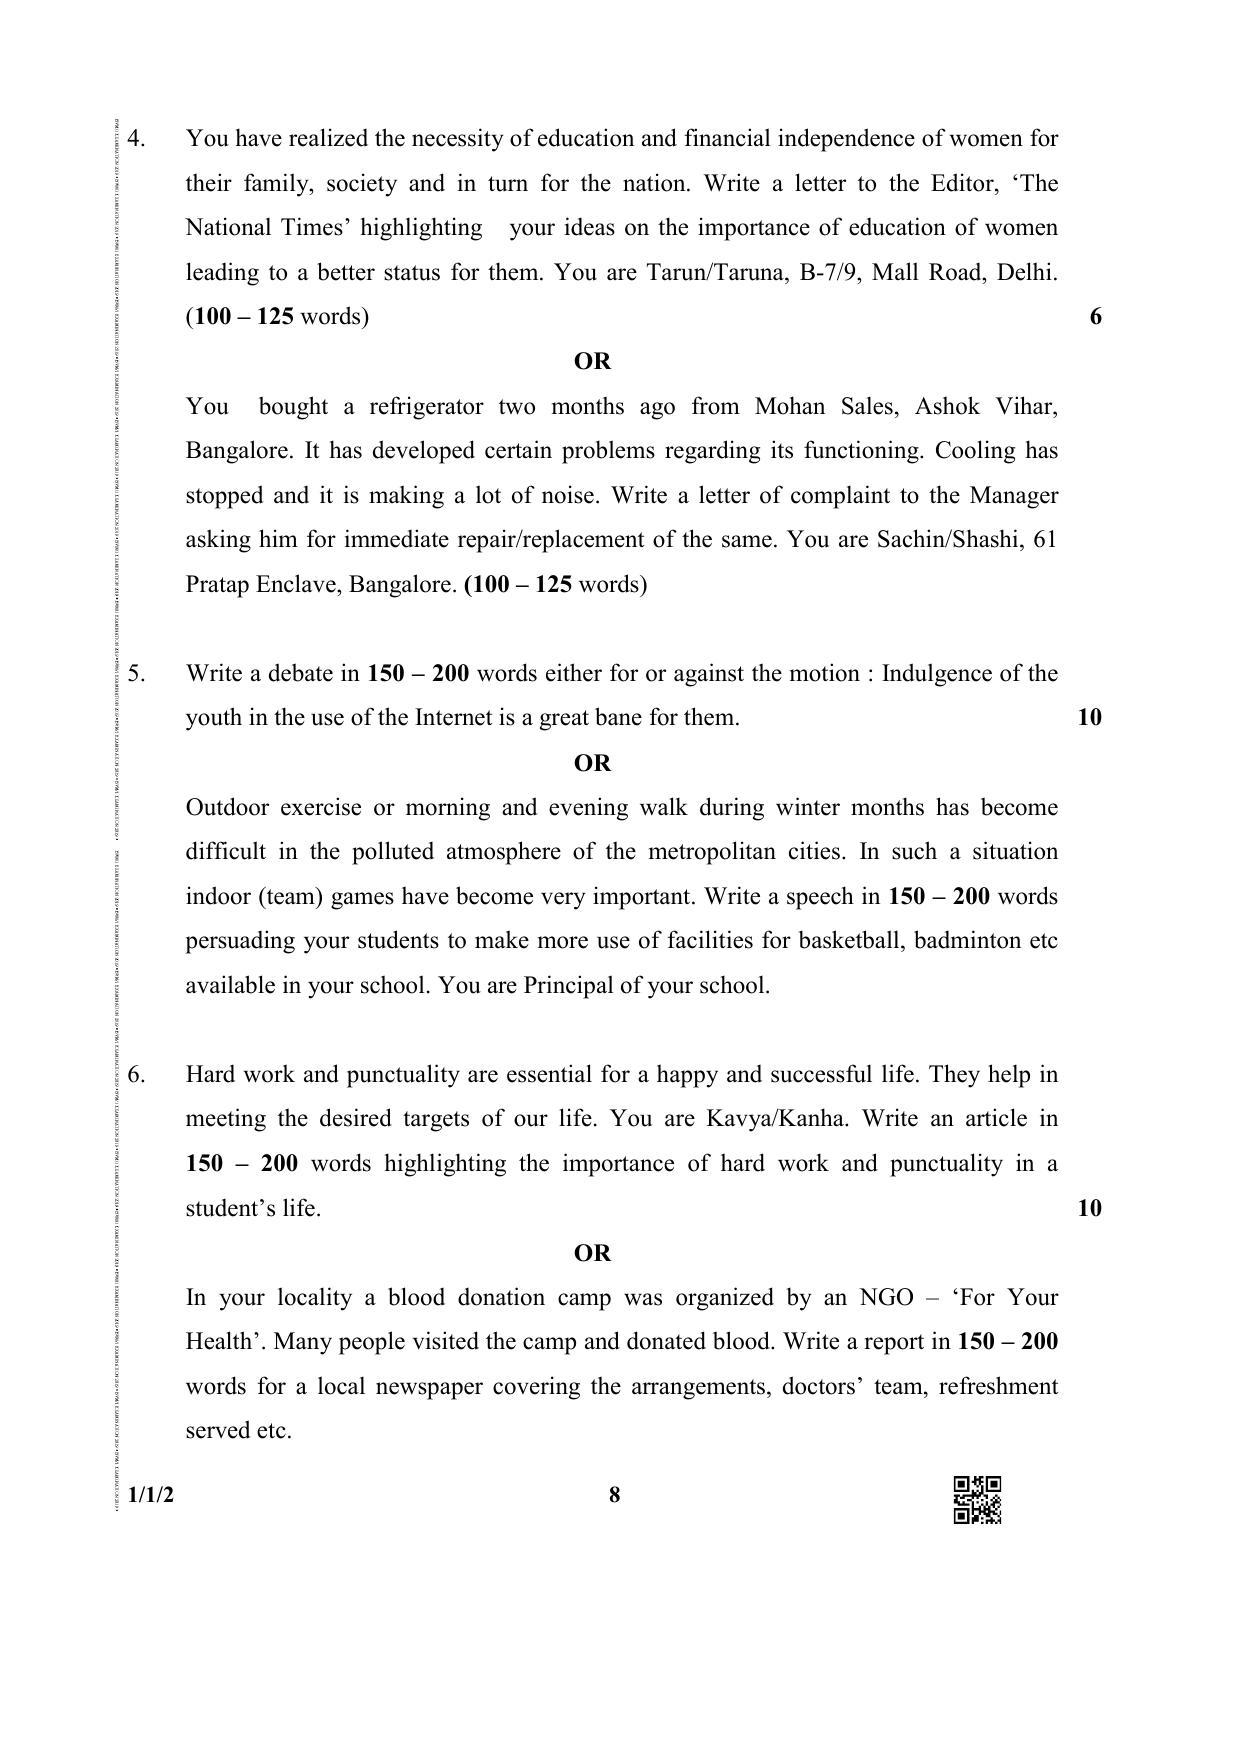 CBSE Class 12 1-1-2 (English Core) 2019 Question Paper - Page 8